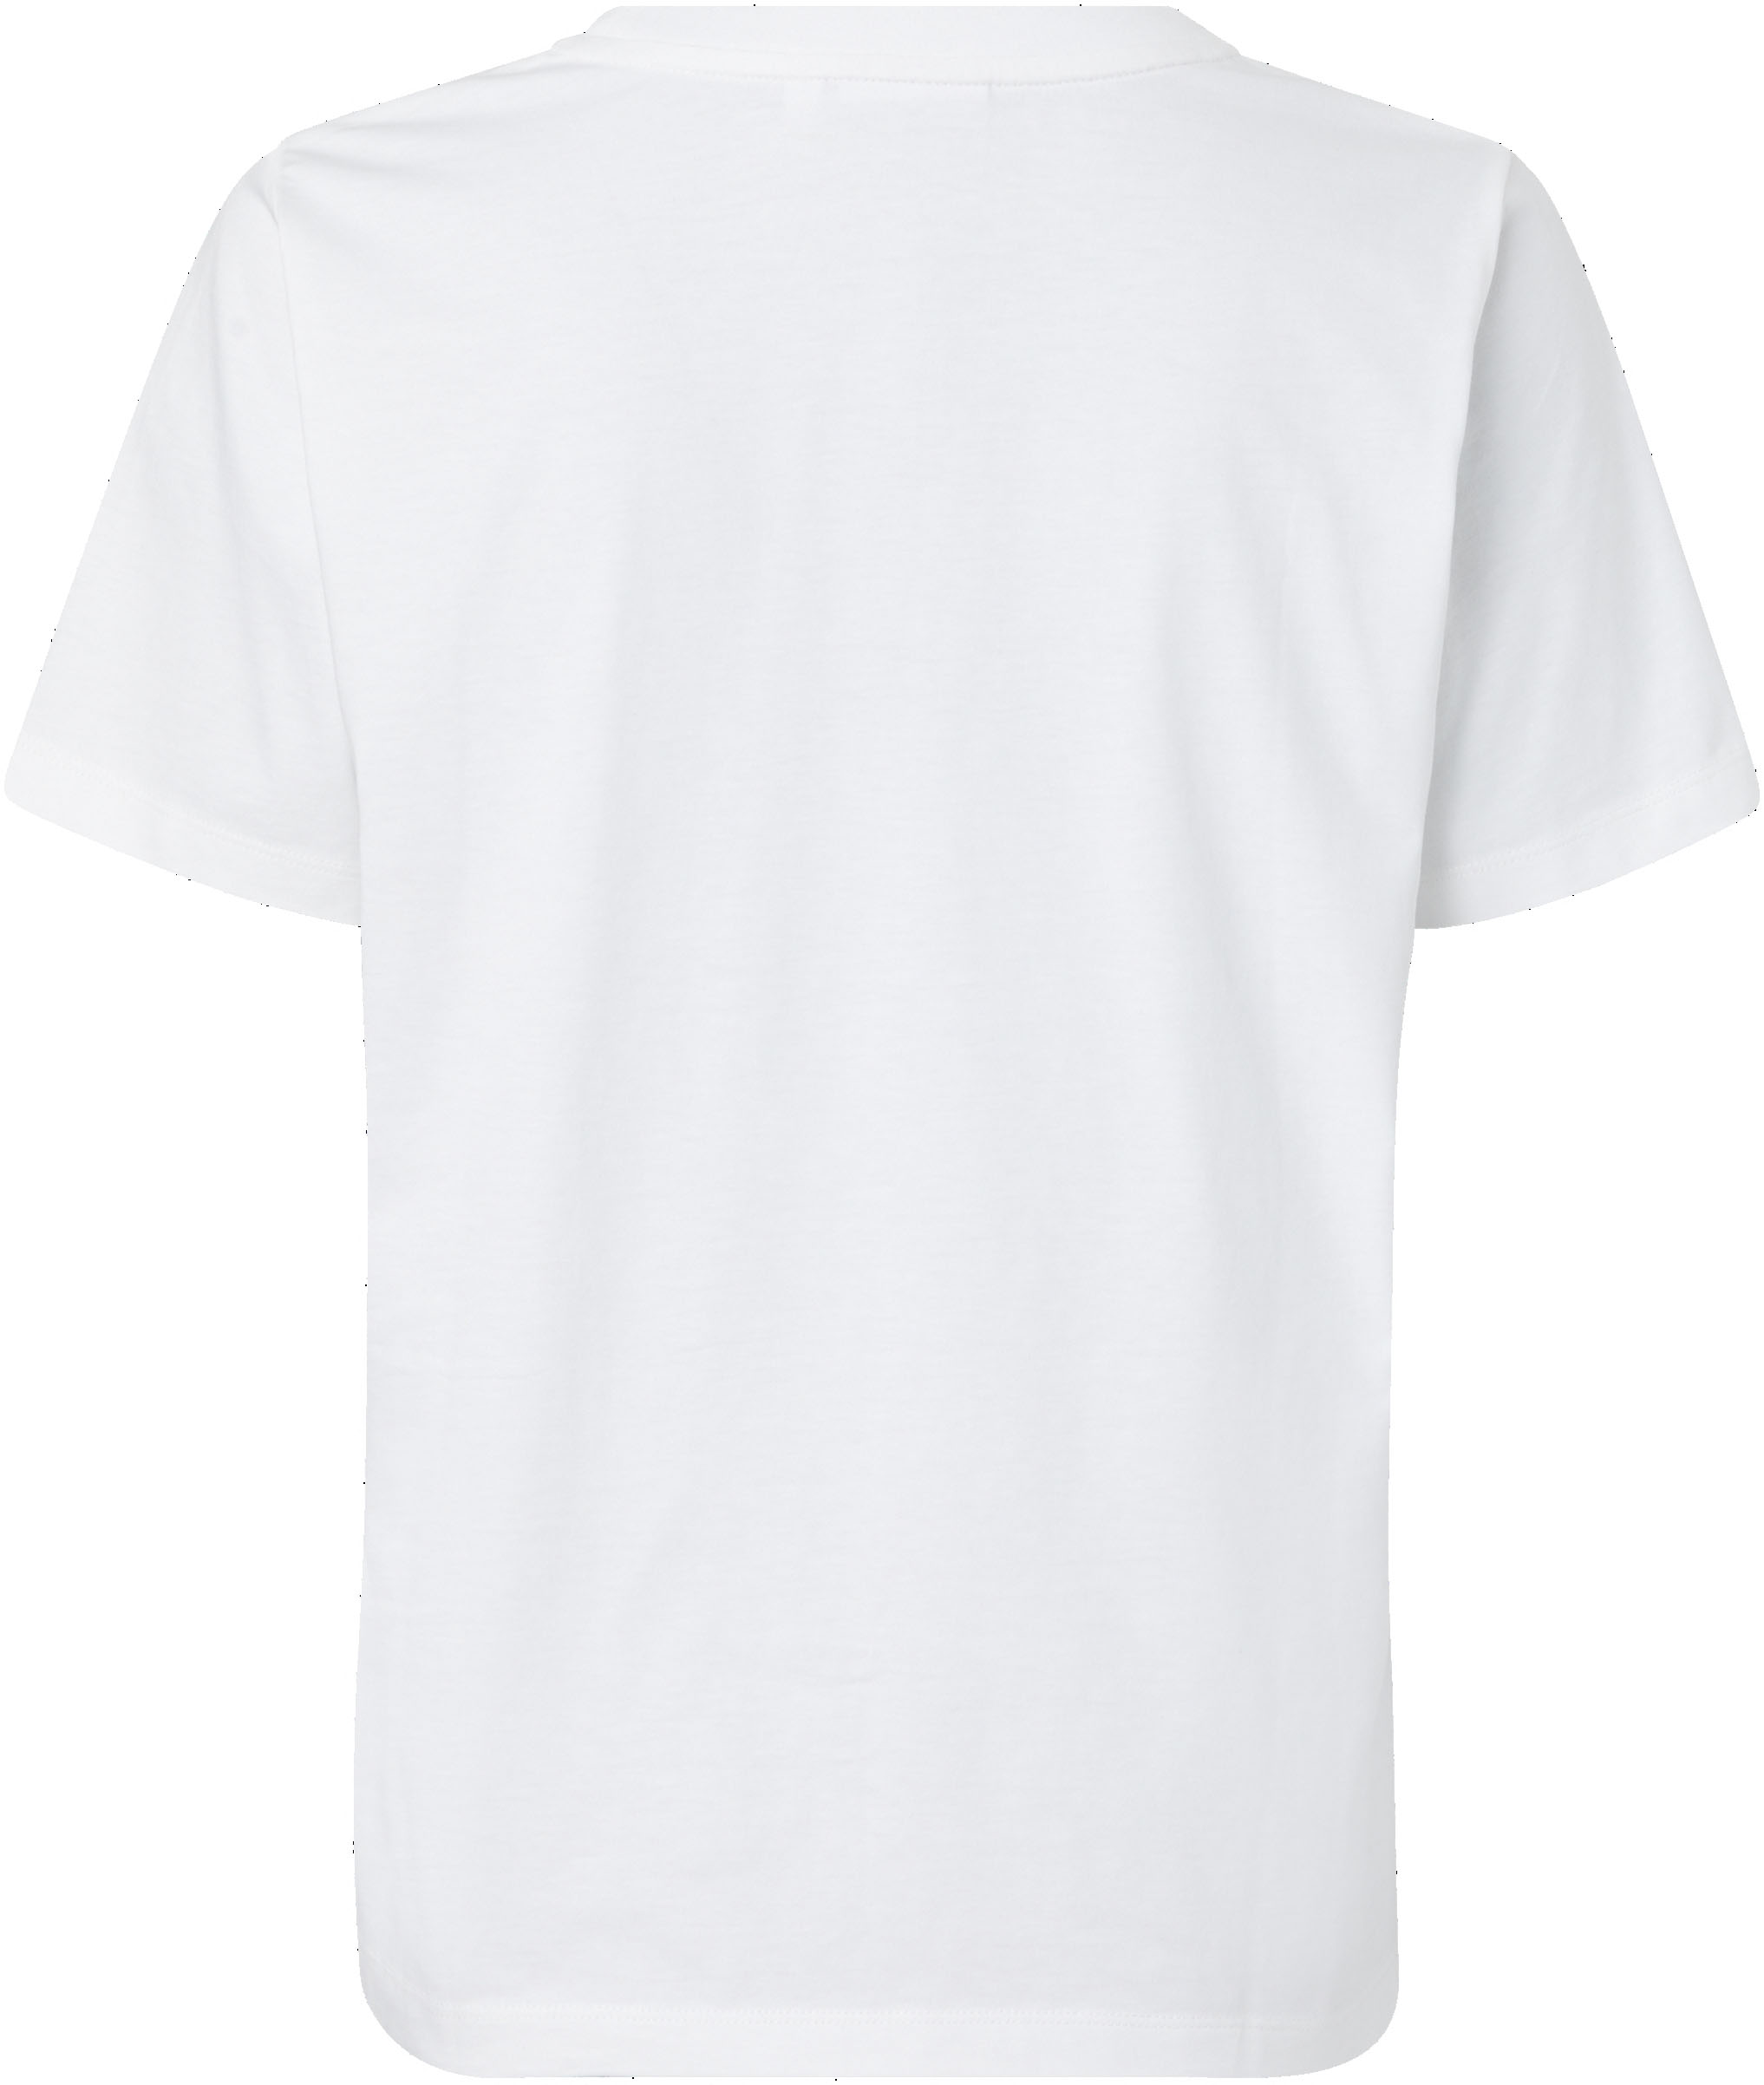 G-Star RAW T-Shirt »T-Shirt Mysid r t optic slim«, mit Druck auf dem Ärmel  kaufen